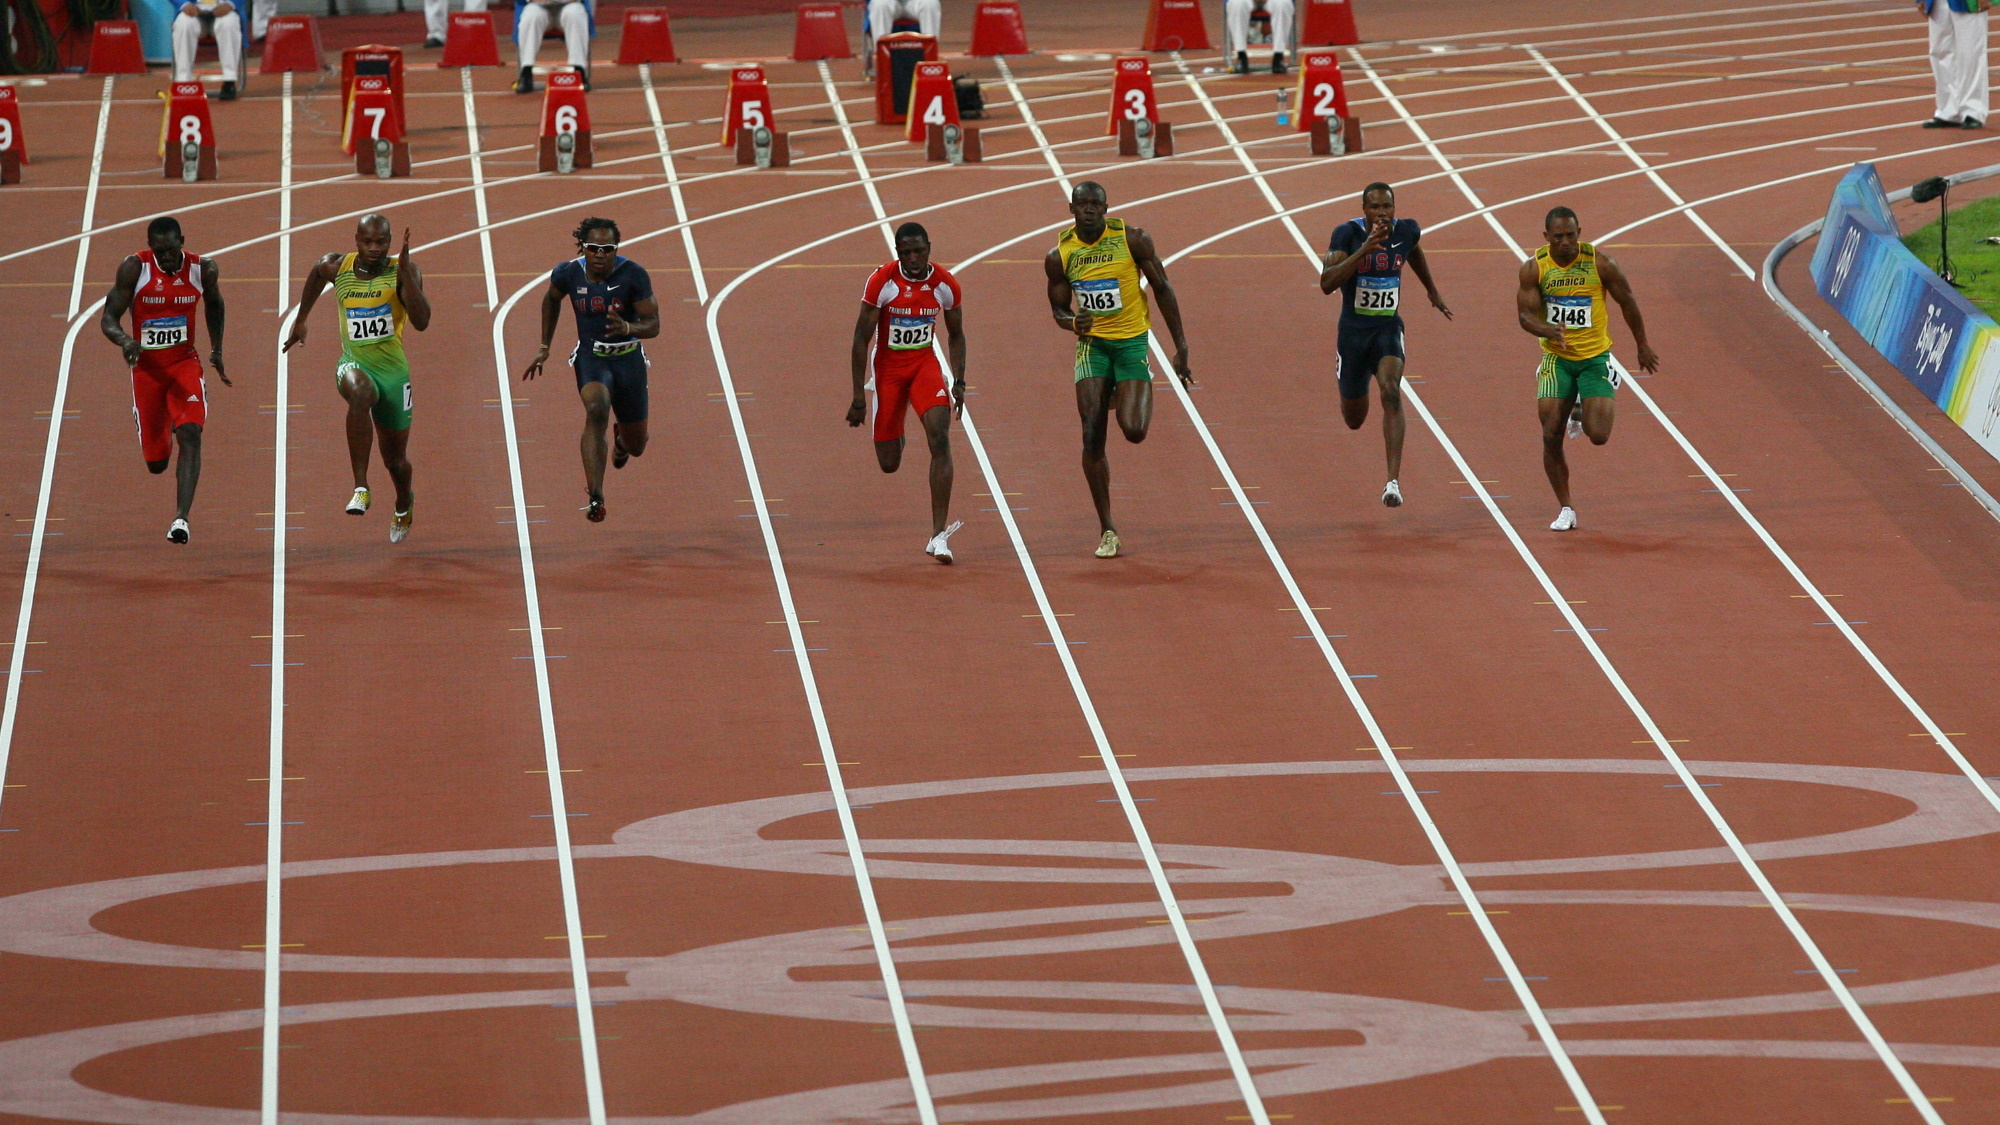 100 metres sprint at Olympics